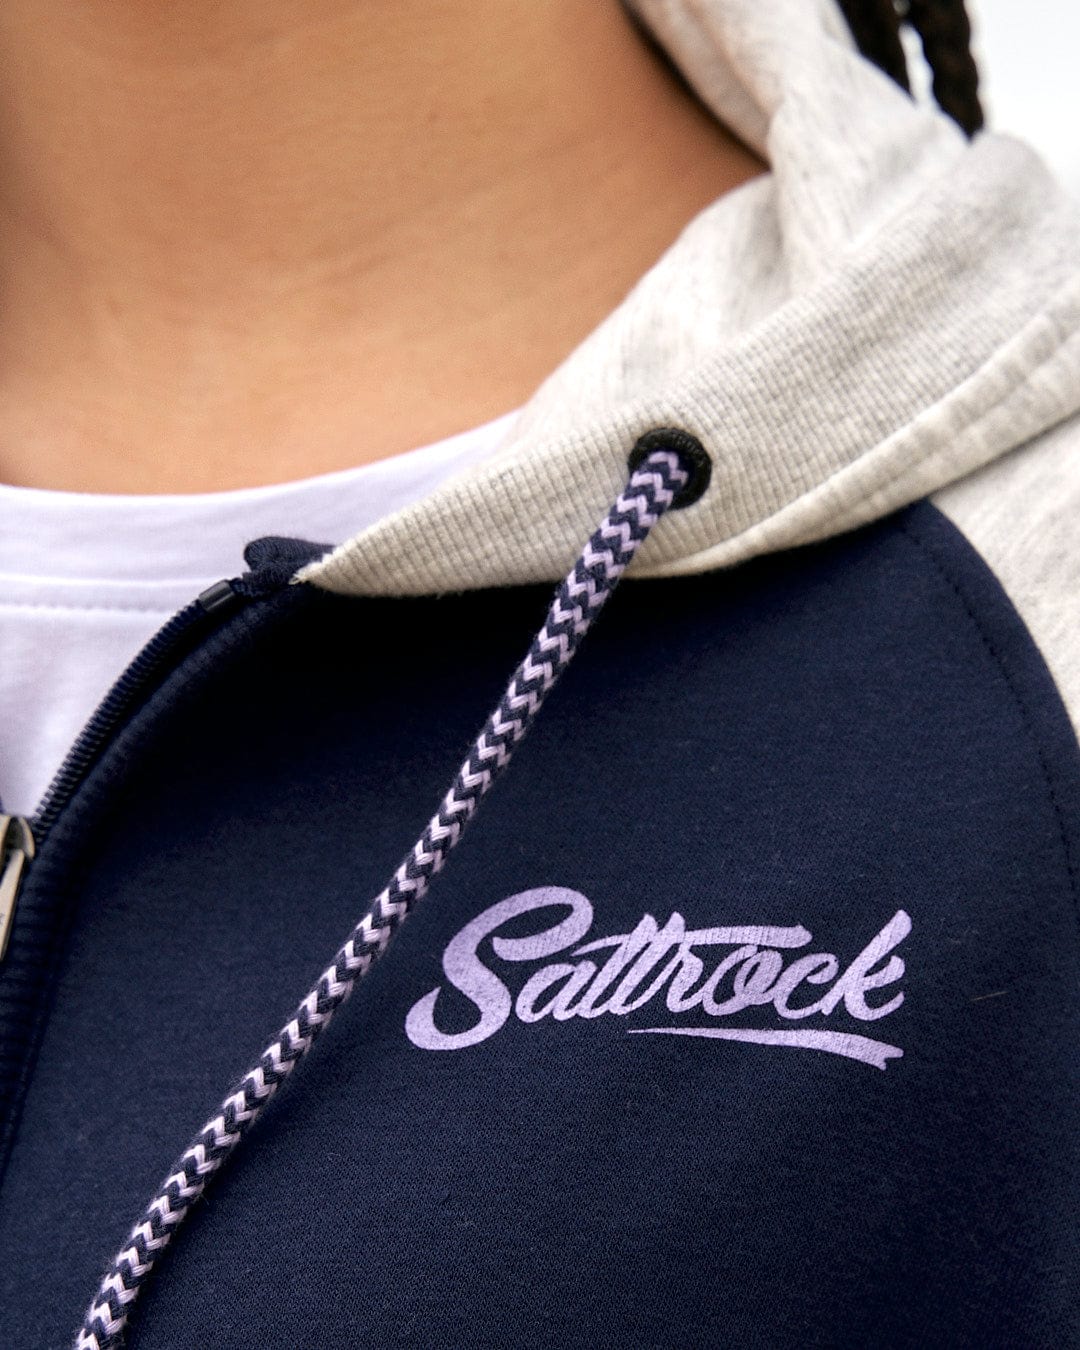 A woman wearing a Saltrock Zip Hoodie - Dark Blue.